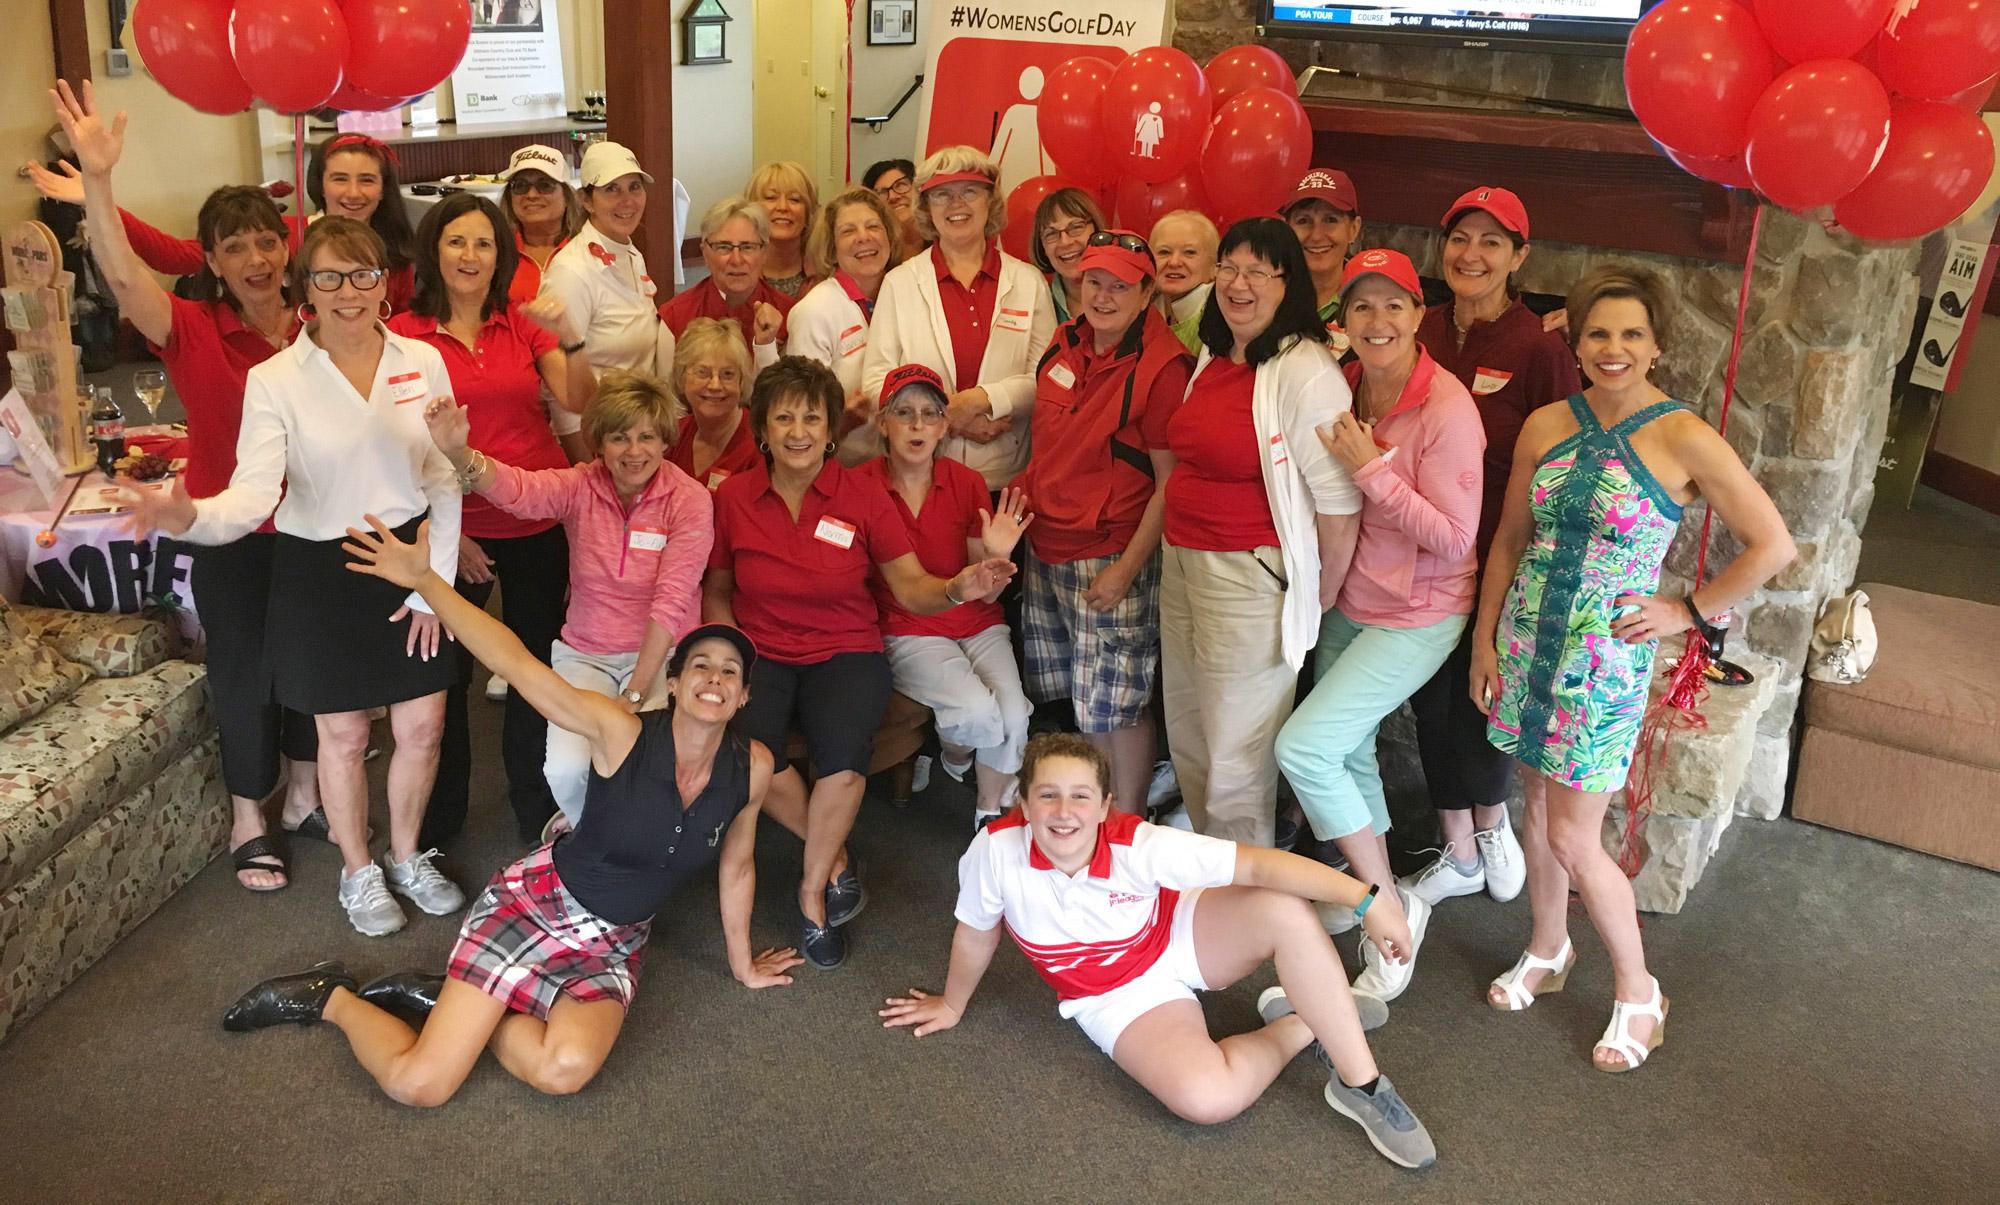 Women's Golf Day JUNE 1, 2021 at Atkinson Resort